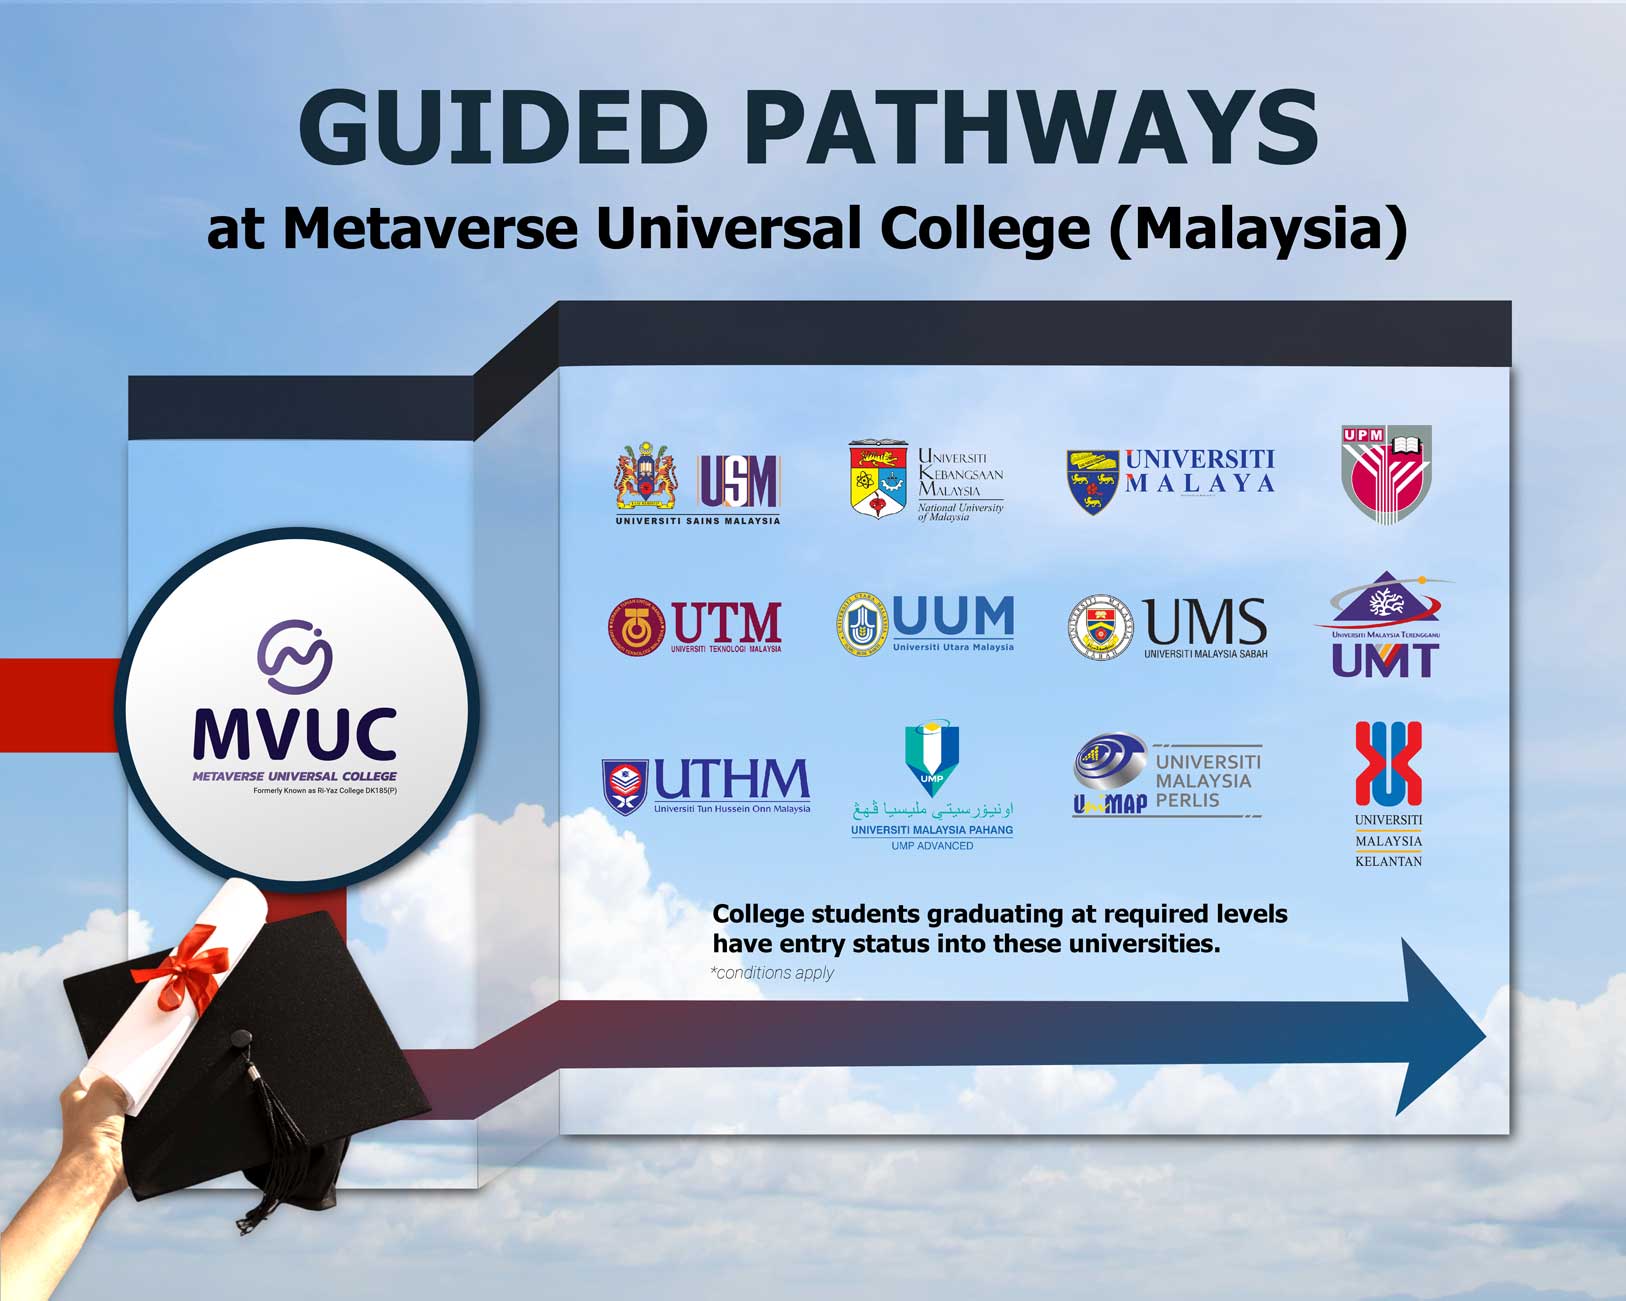 MVUC Pathways